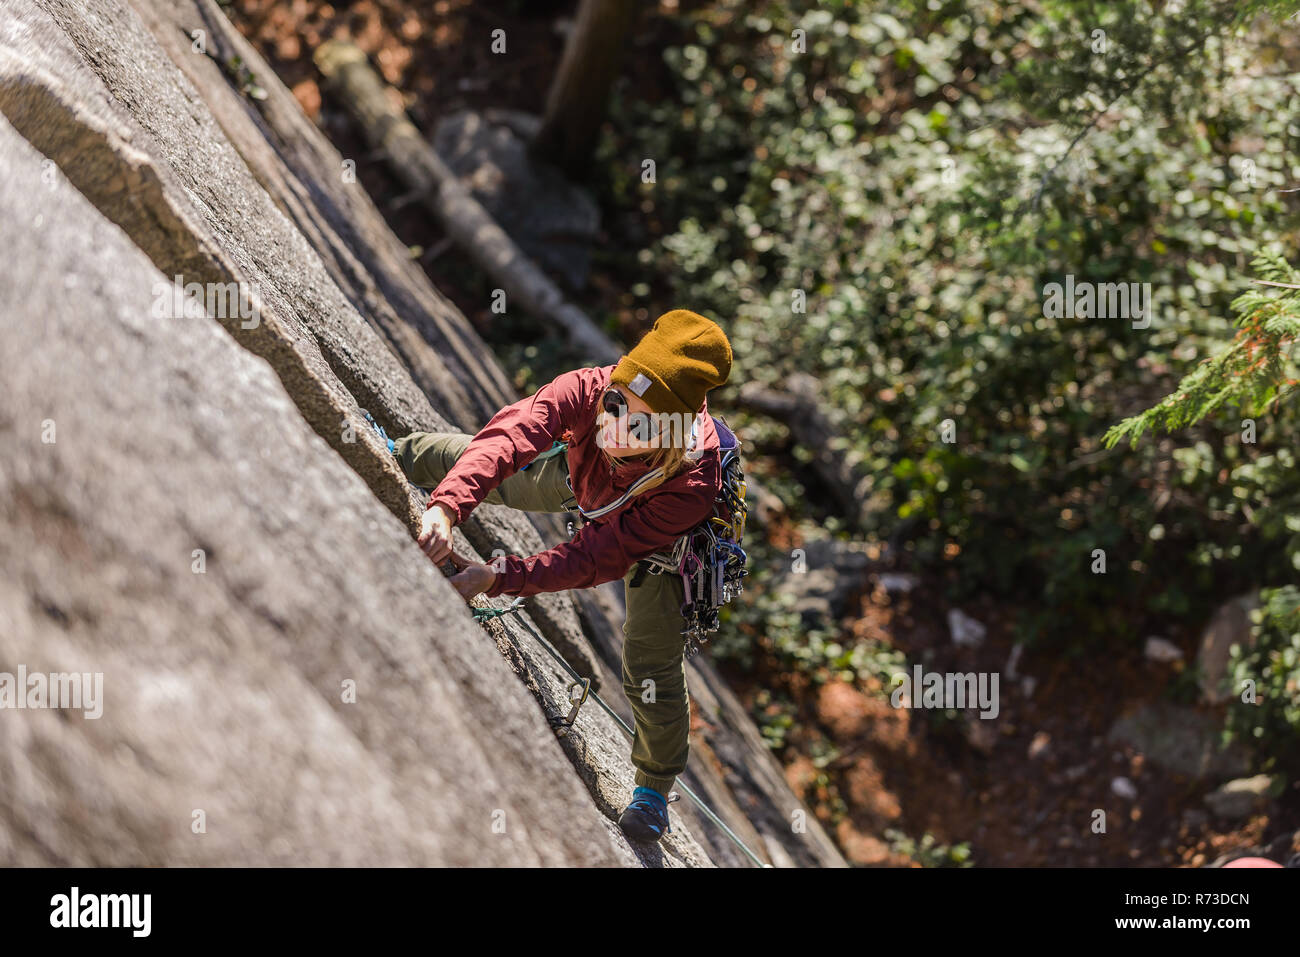 Kletterer greifen auf Risse, Malamute, Squamish, Kanada Stockfoto